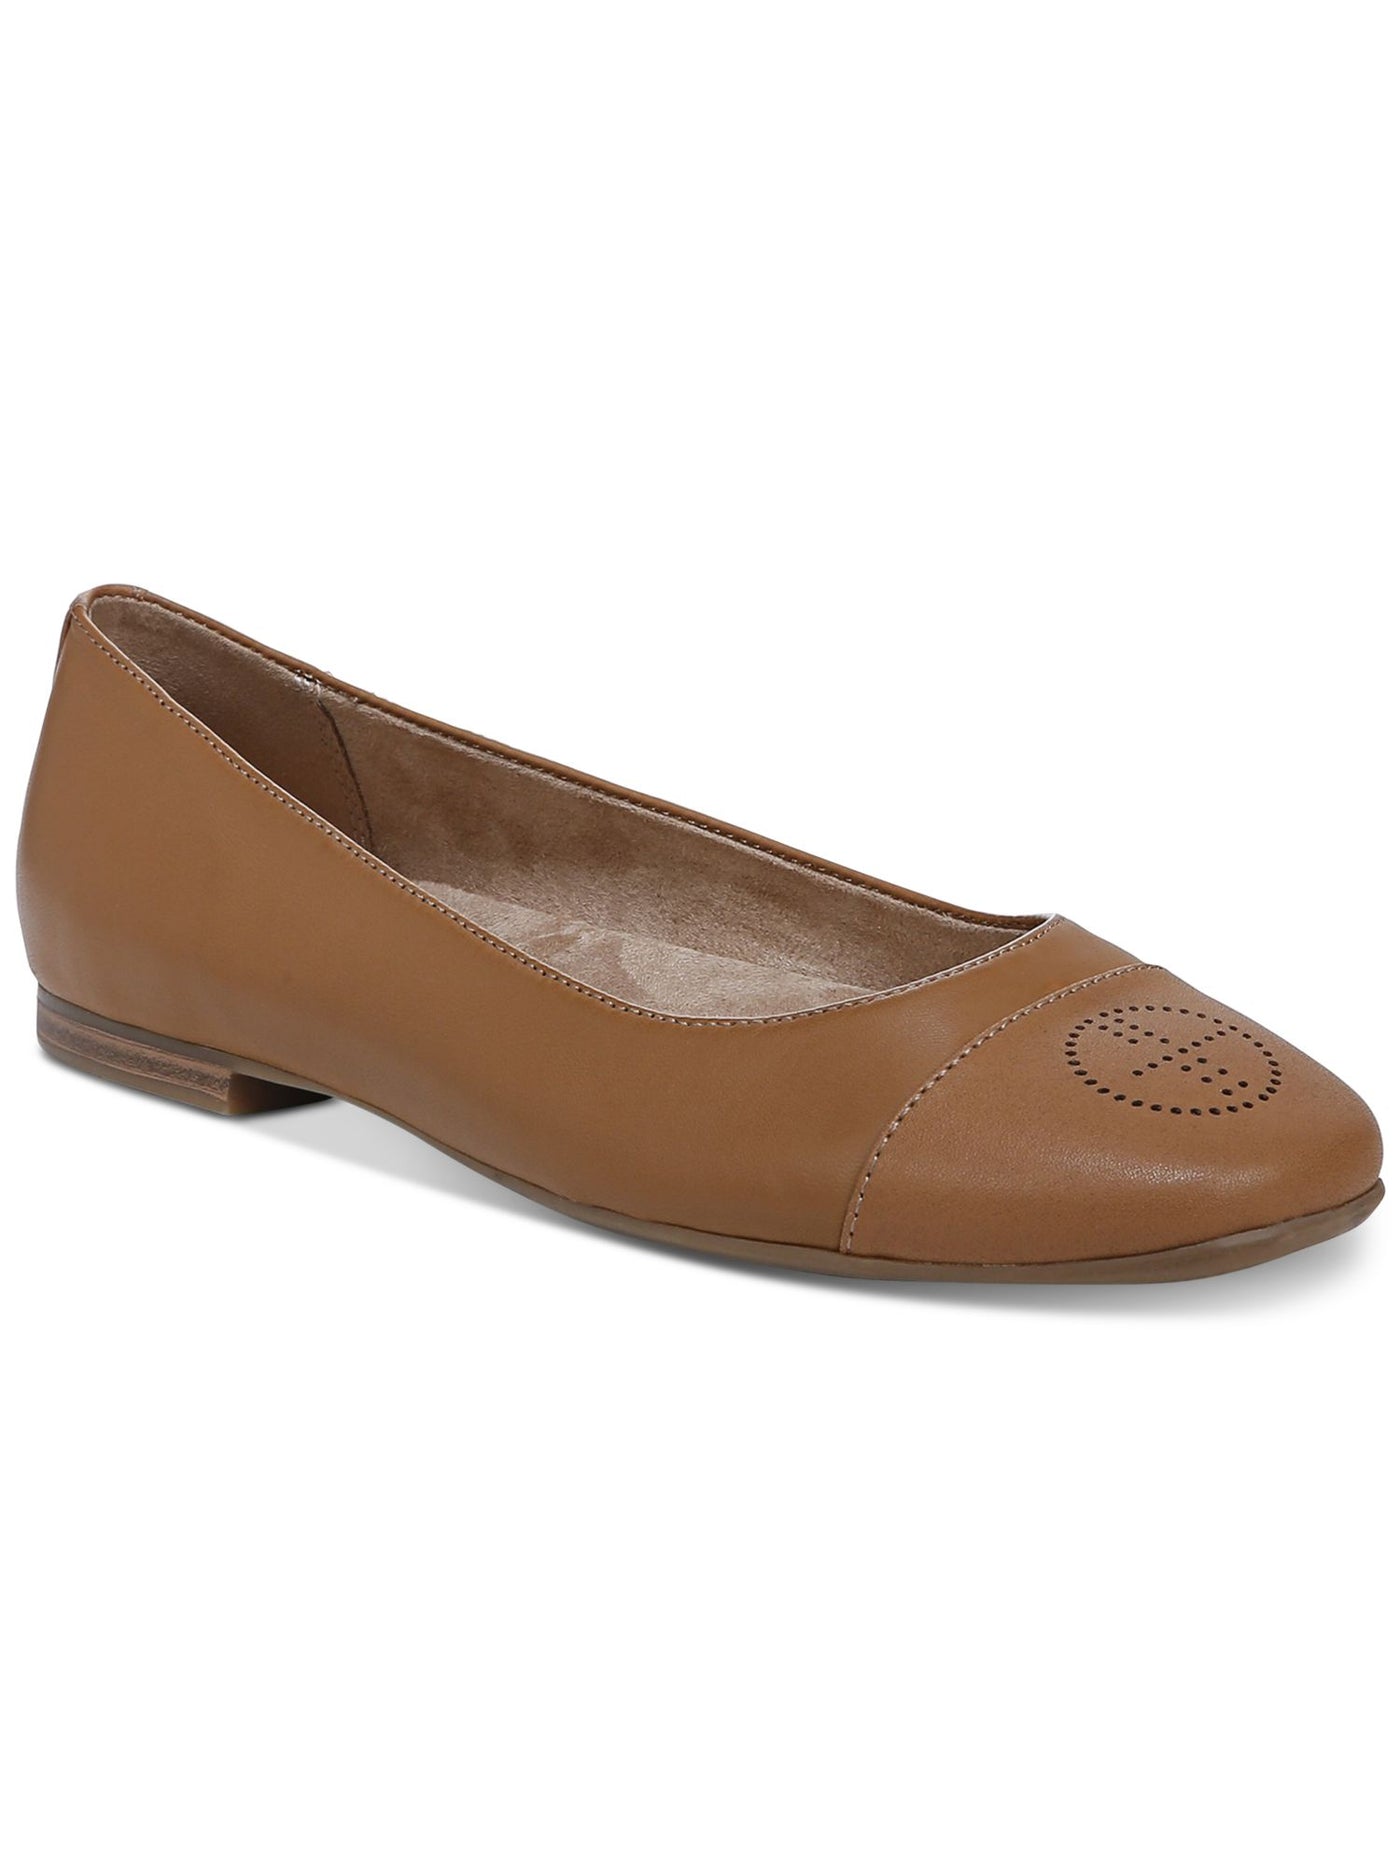 GIANI BERNINI Womens Brown Comfort Perforated Cushioned Aerinn Square Toe Slip On Flats Shoes 8 M